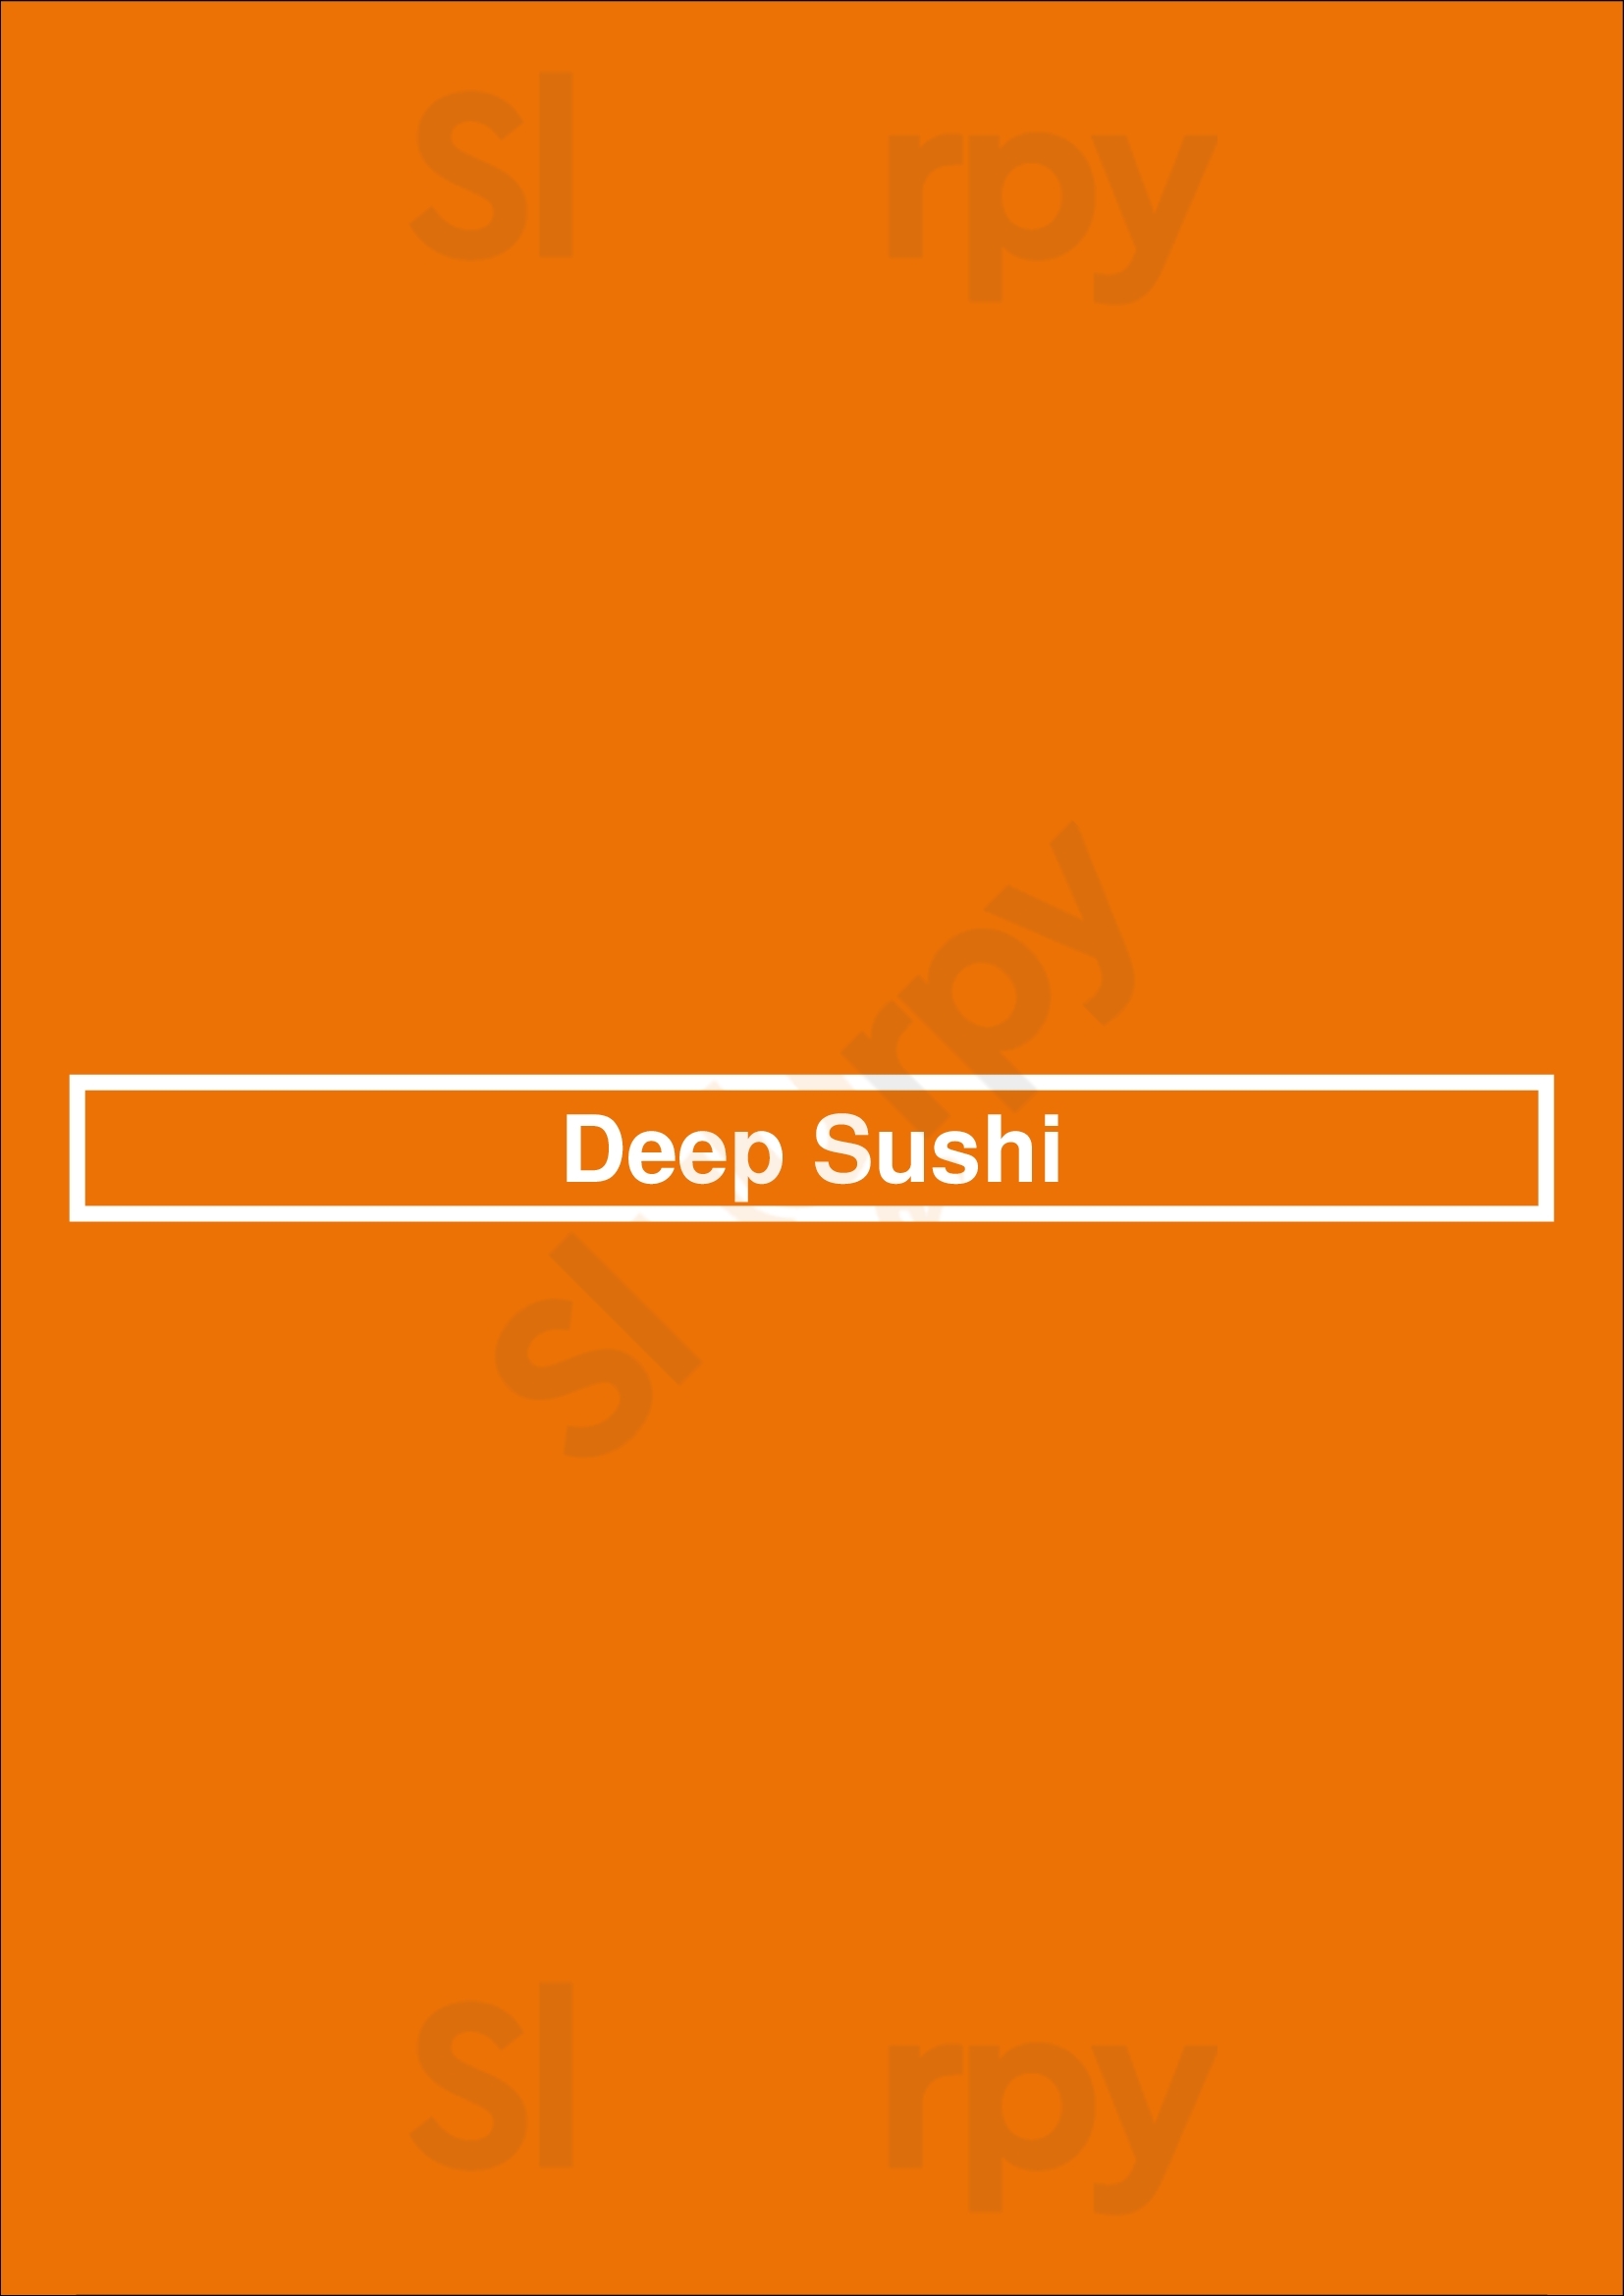 Deep Sushi Dallas Menu - 1